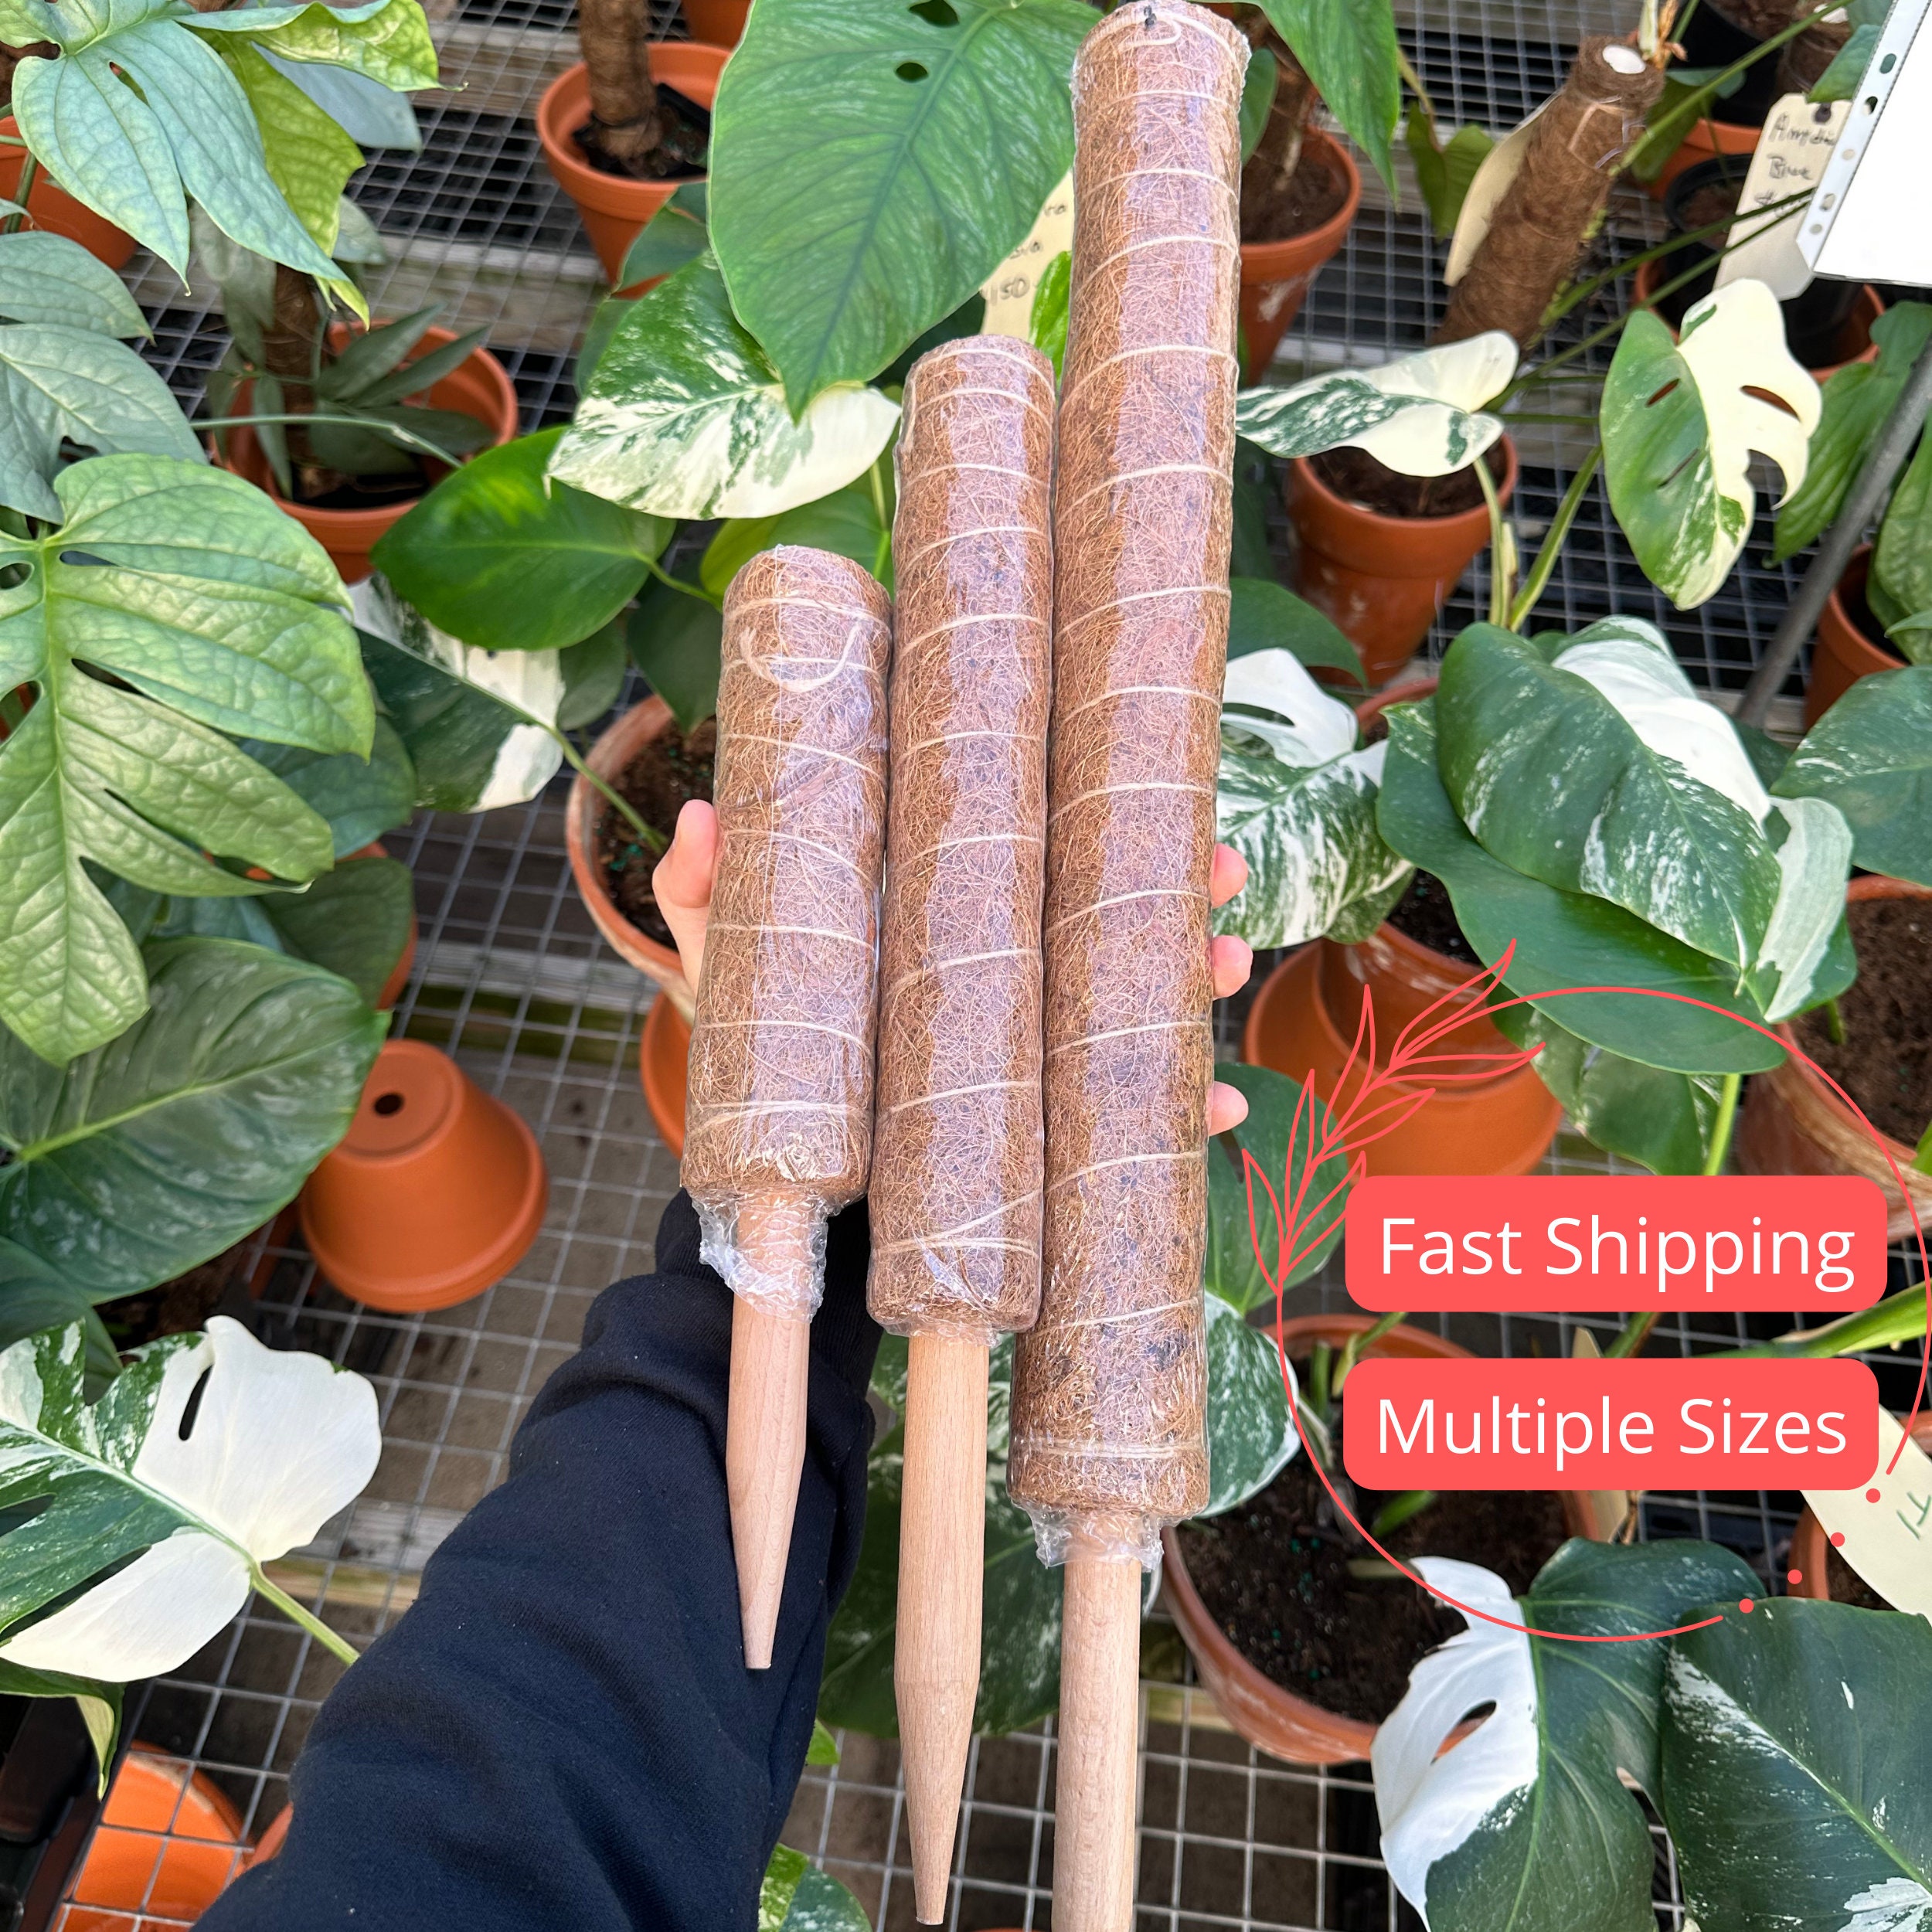 Moss Poles for Climbing Plants - Stackable Plastic Plant Pole